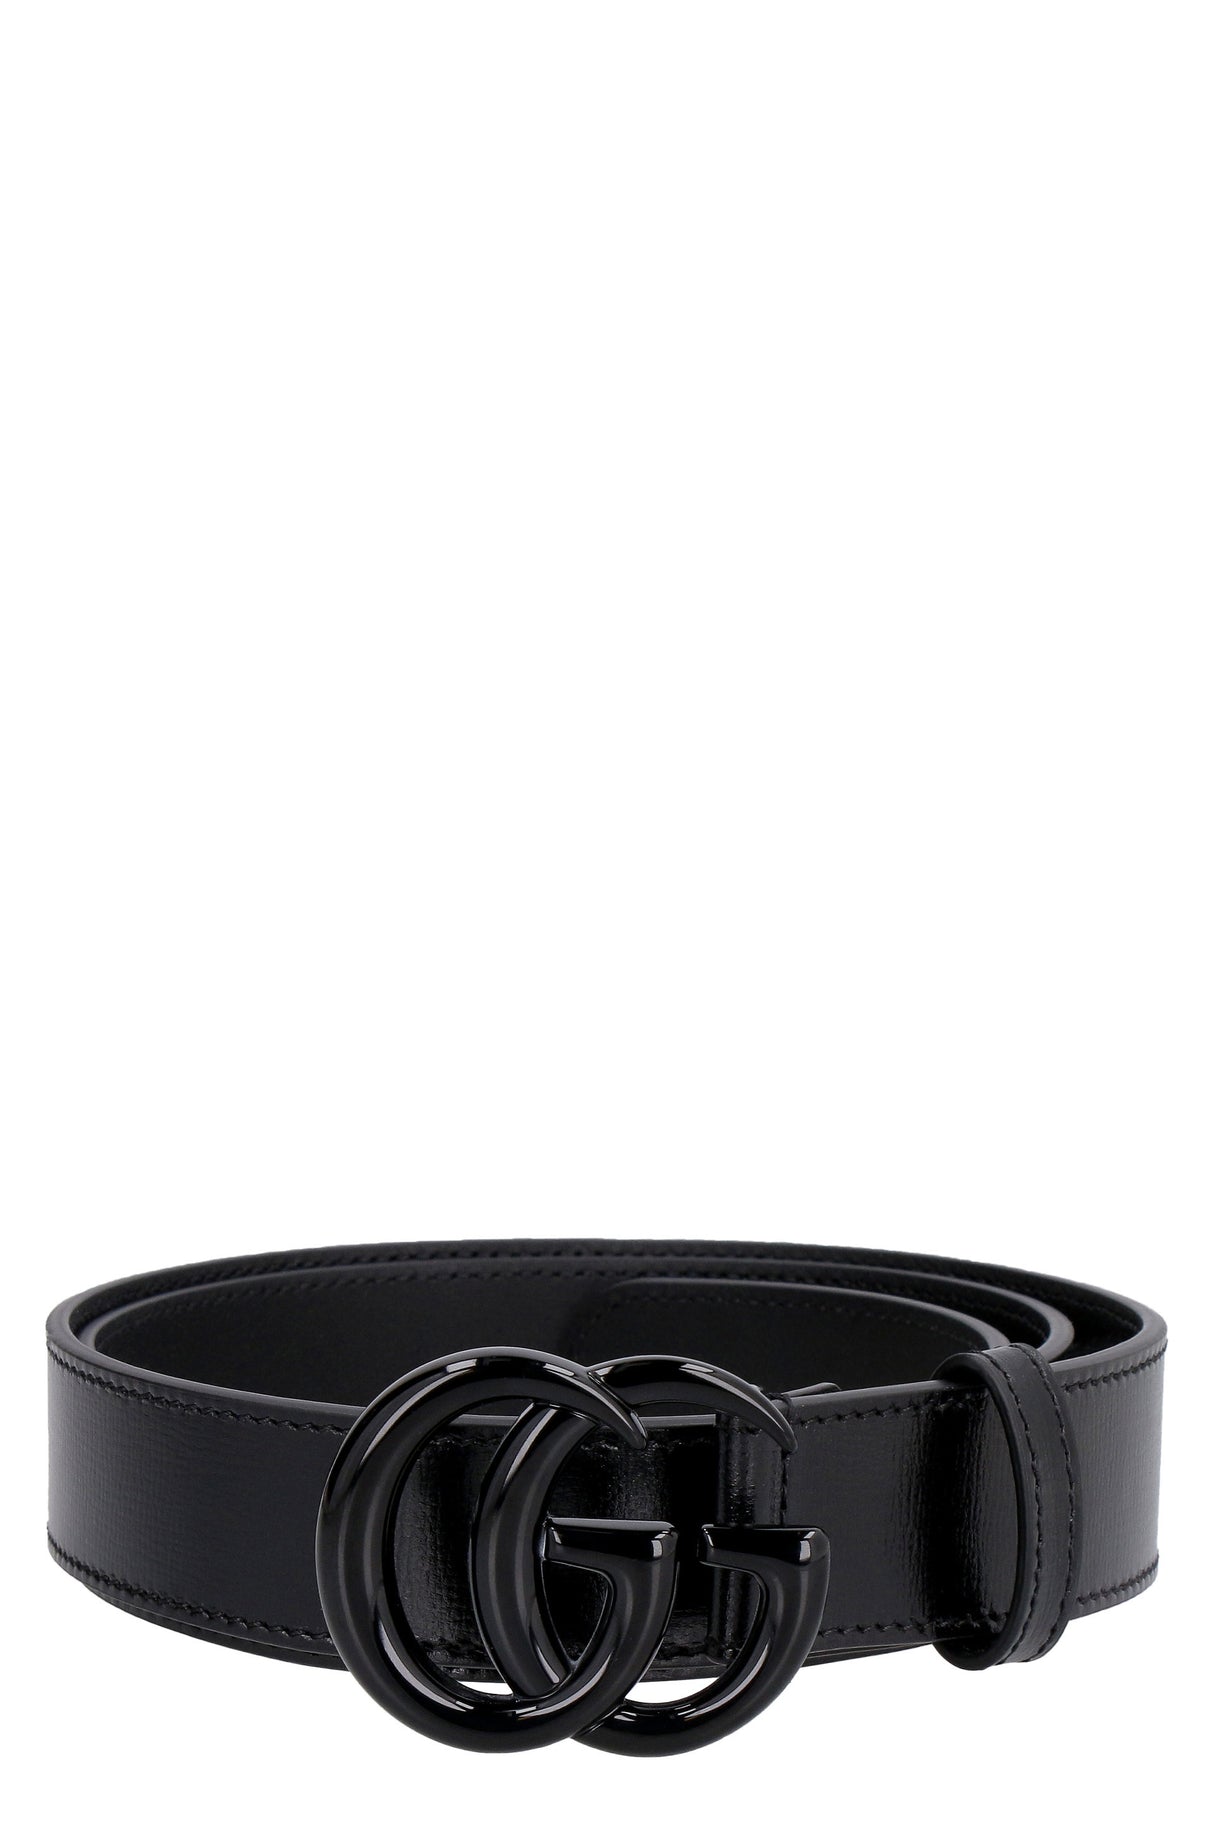 GUCCI Men's Leather Belt with Interlocking G Buckle